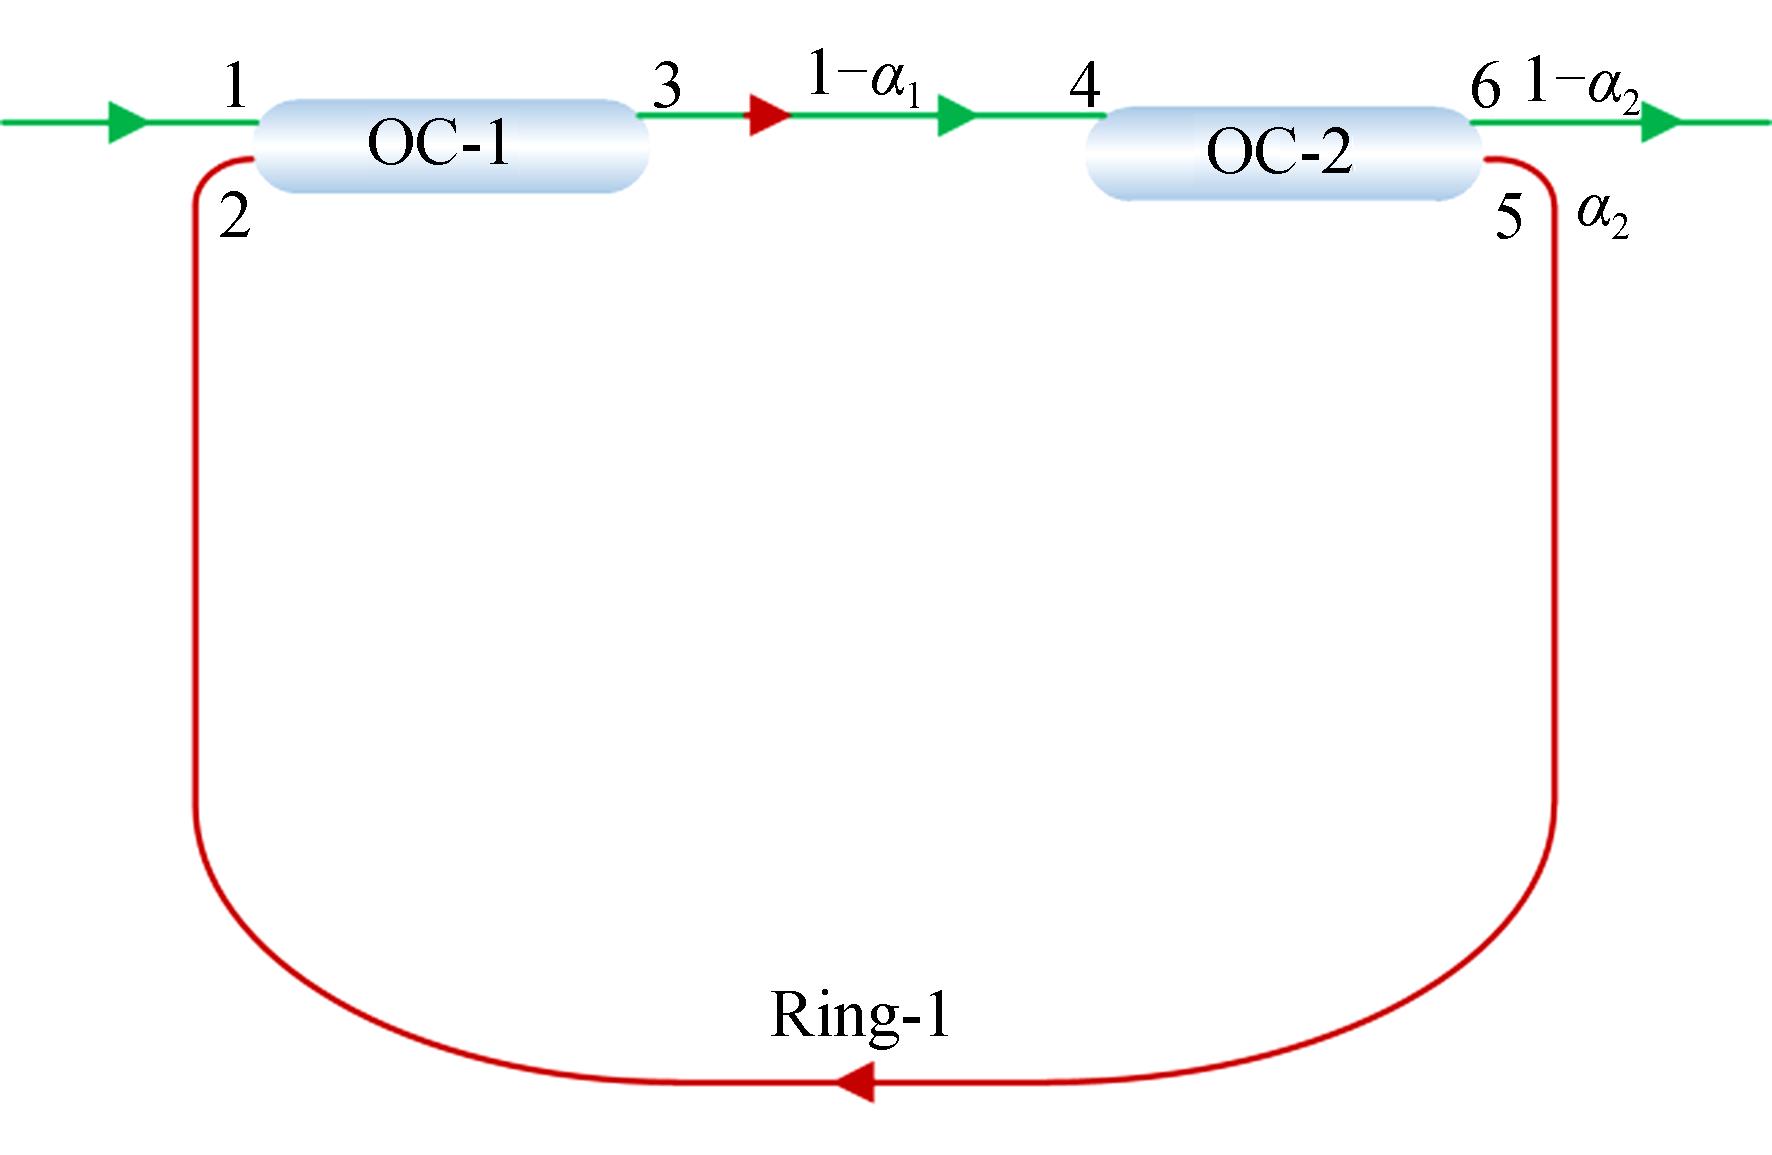 Transmission model of Ring-1